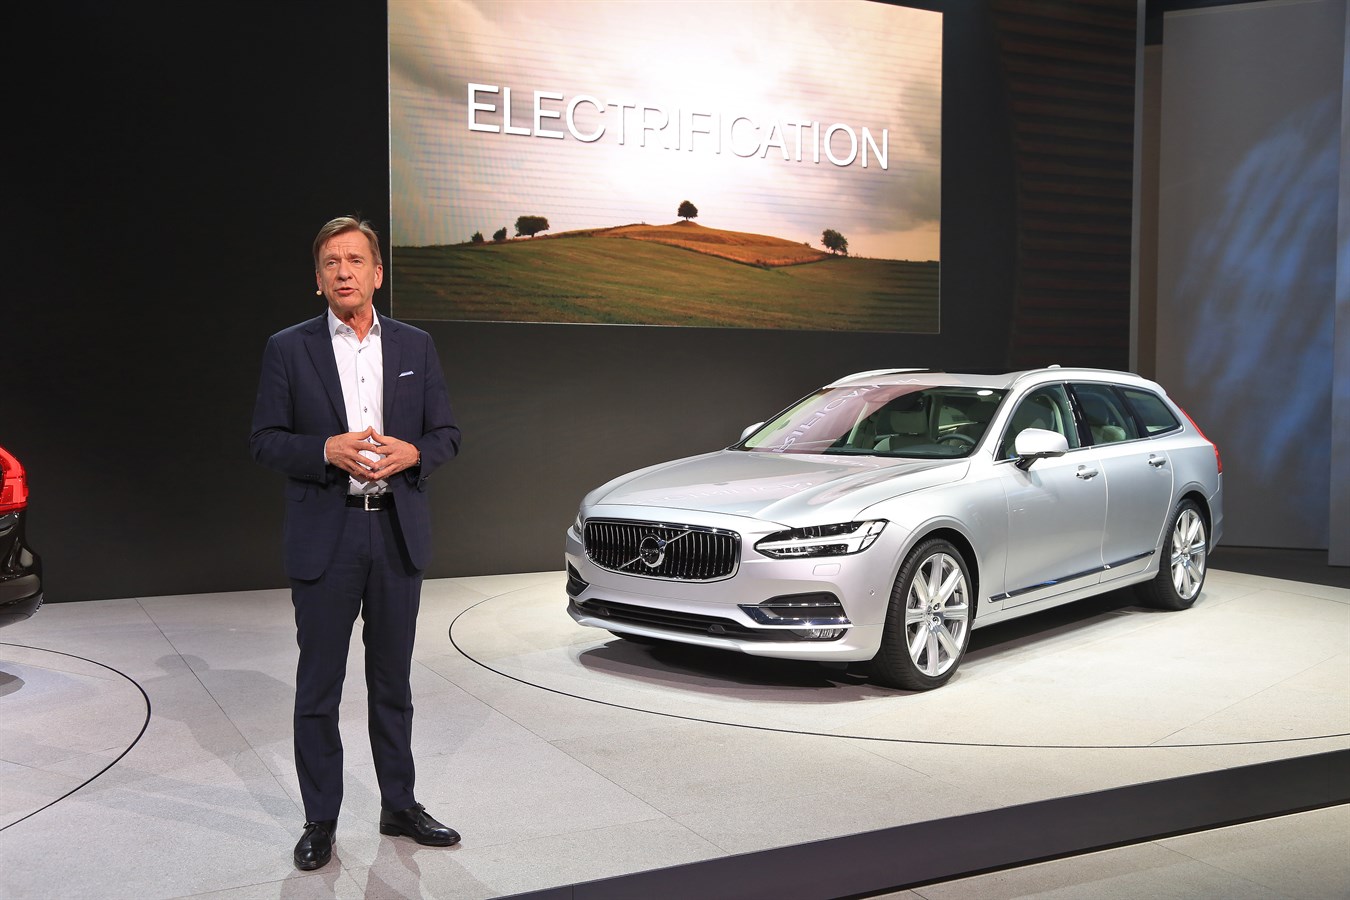 Hakan Samuelsson Président & CEO Volvo Cars - V90 - Salon de Genève 2016